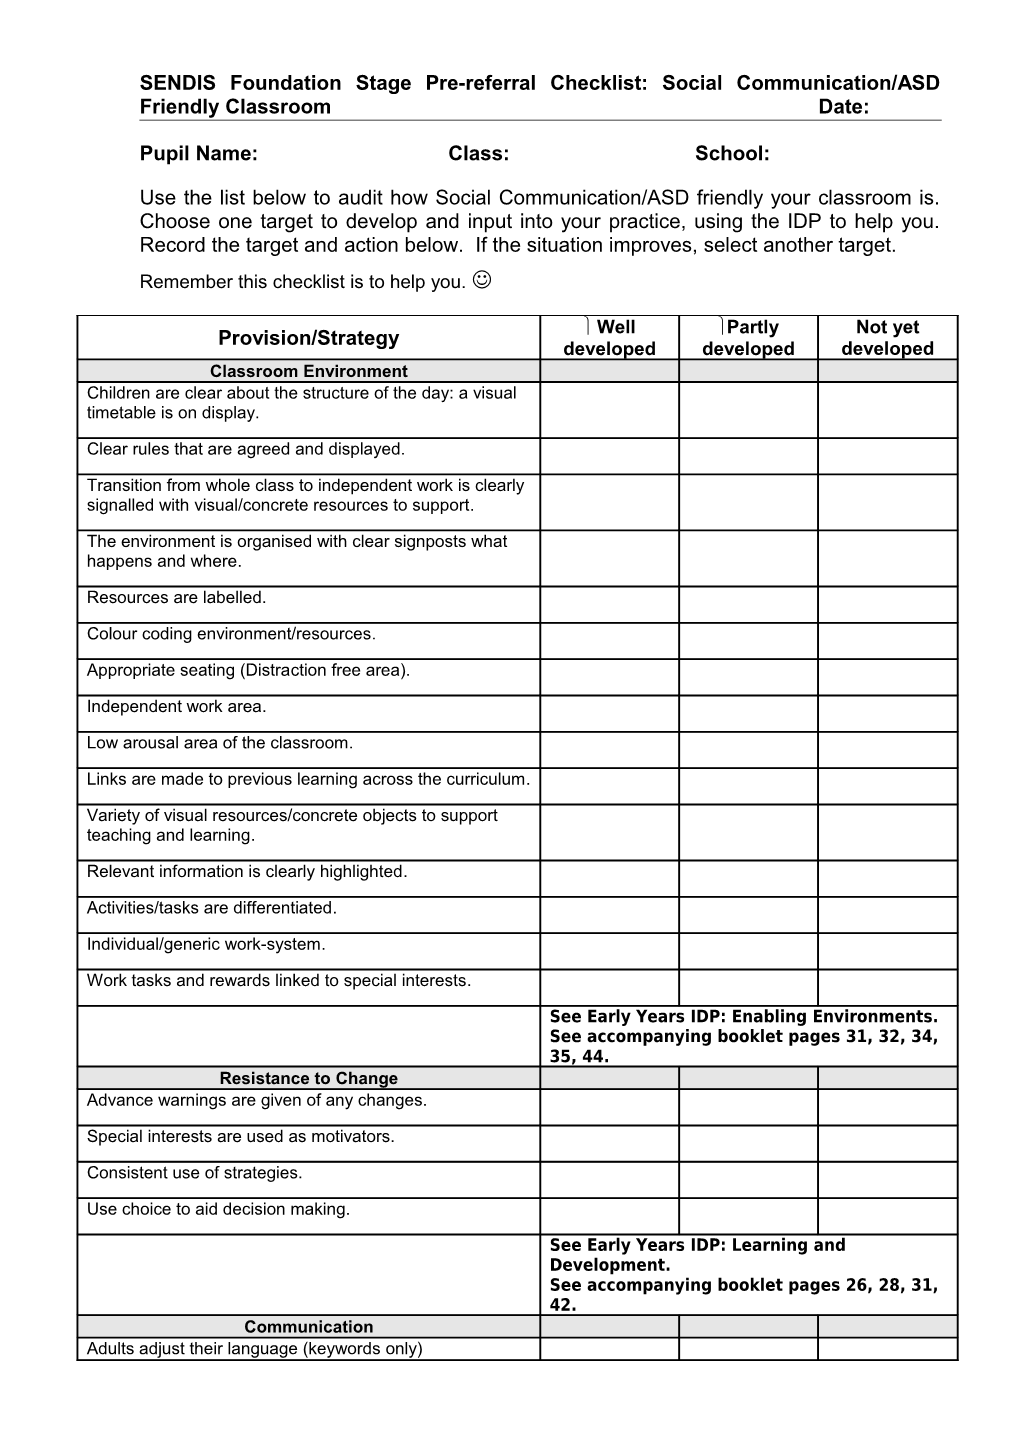 Checklist For ASD Friendly Classroom